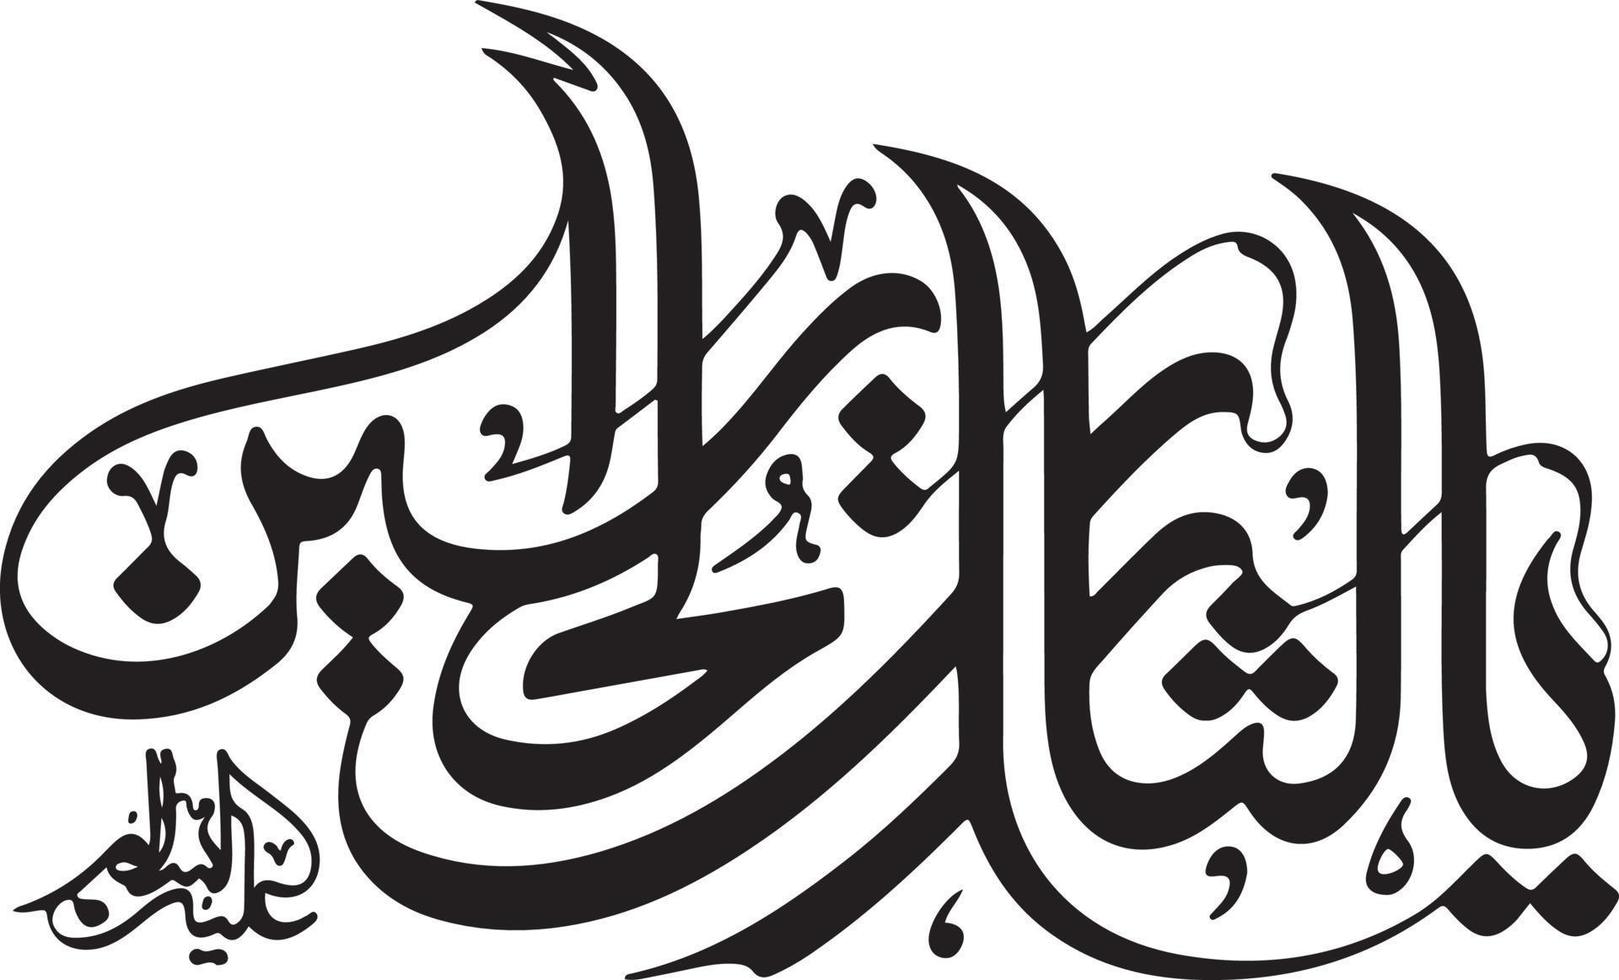 Arbi Islamic Calligraphy Free Vector